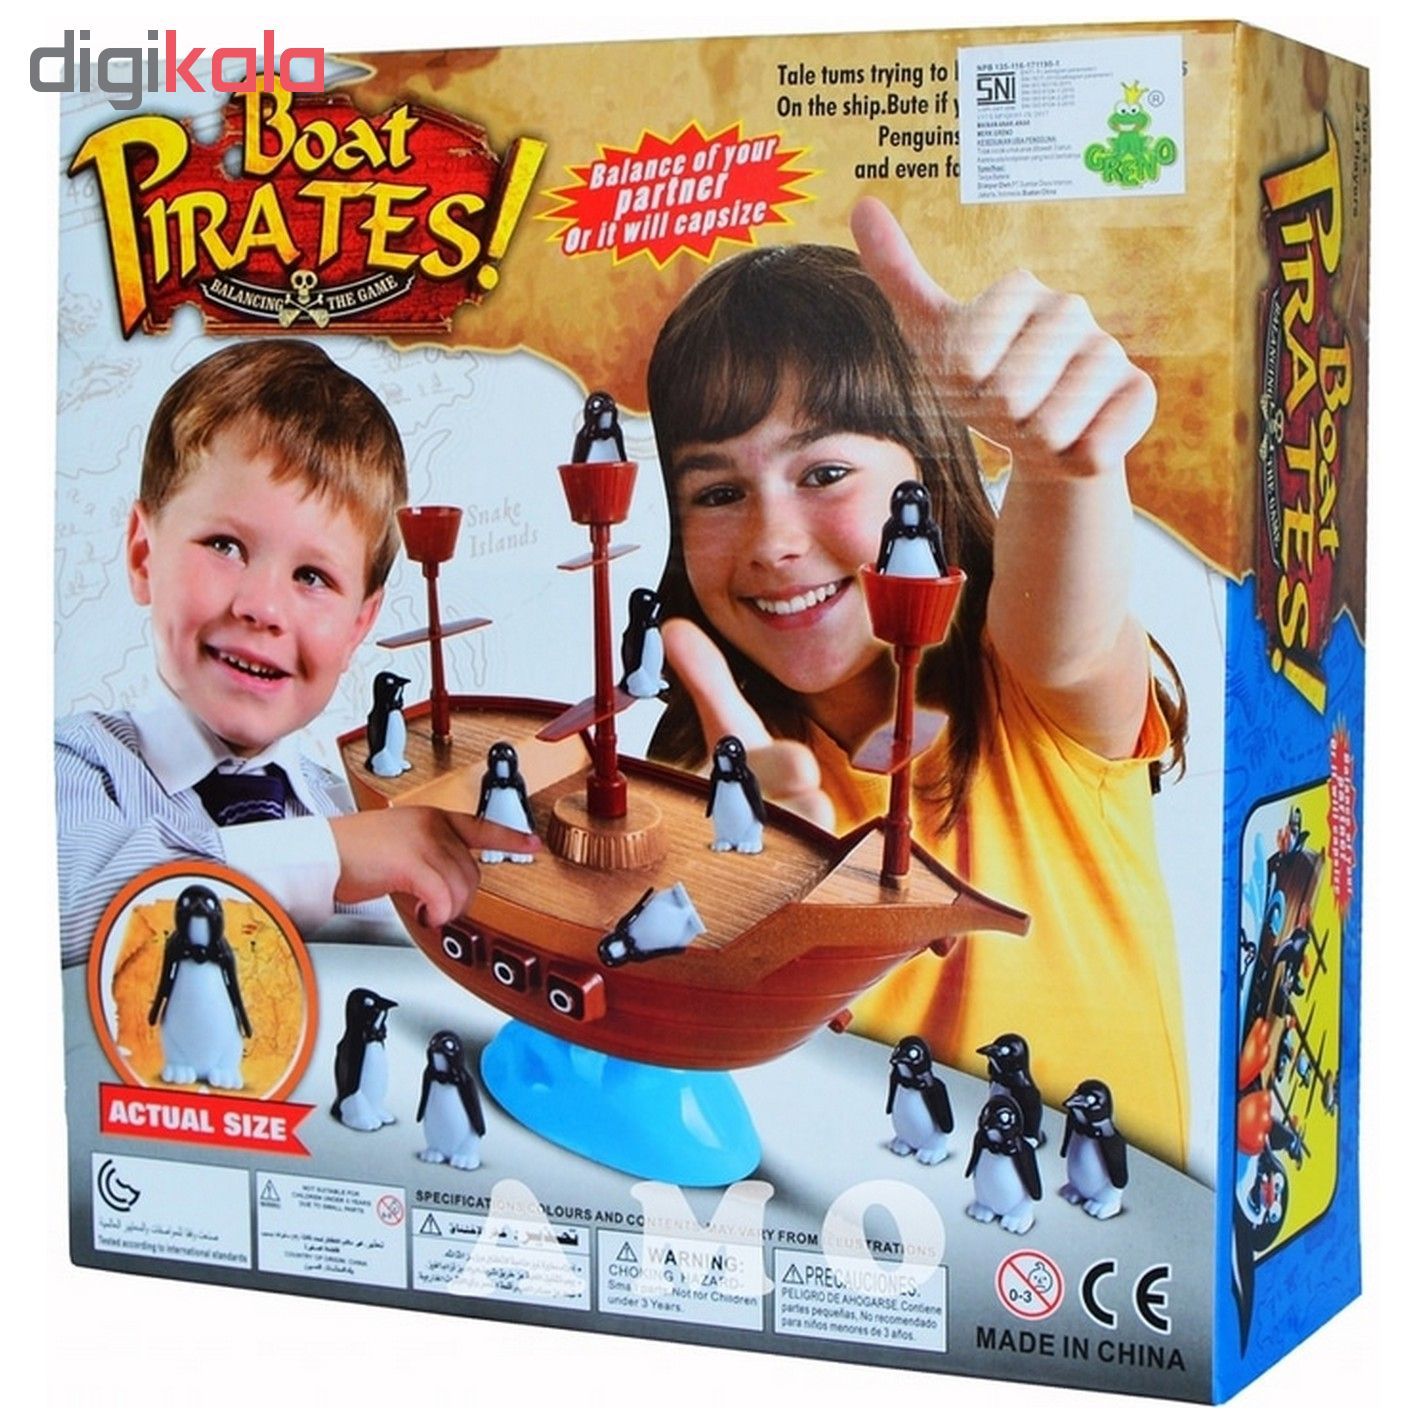 بازی فکری طرح کشتی ان دریایی مدل Pirate Boat